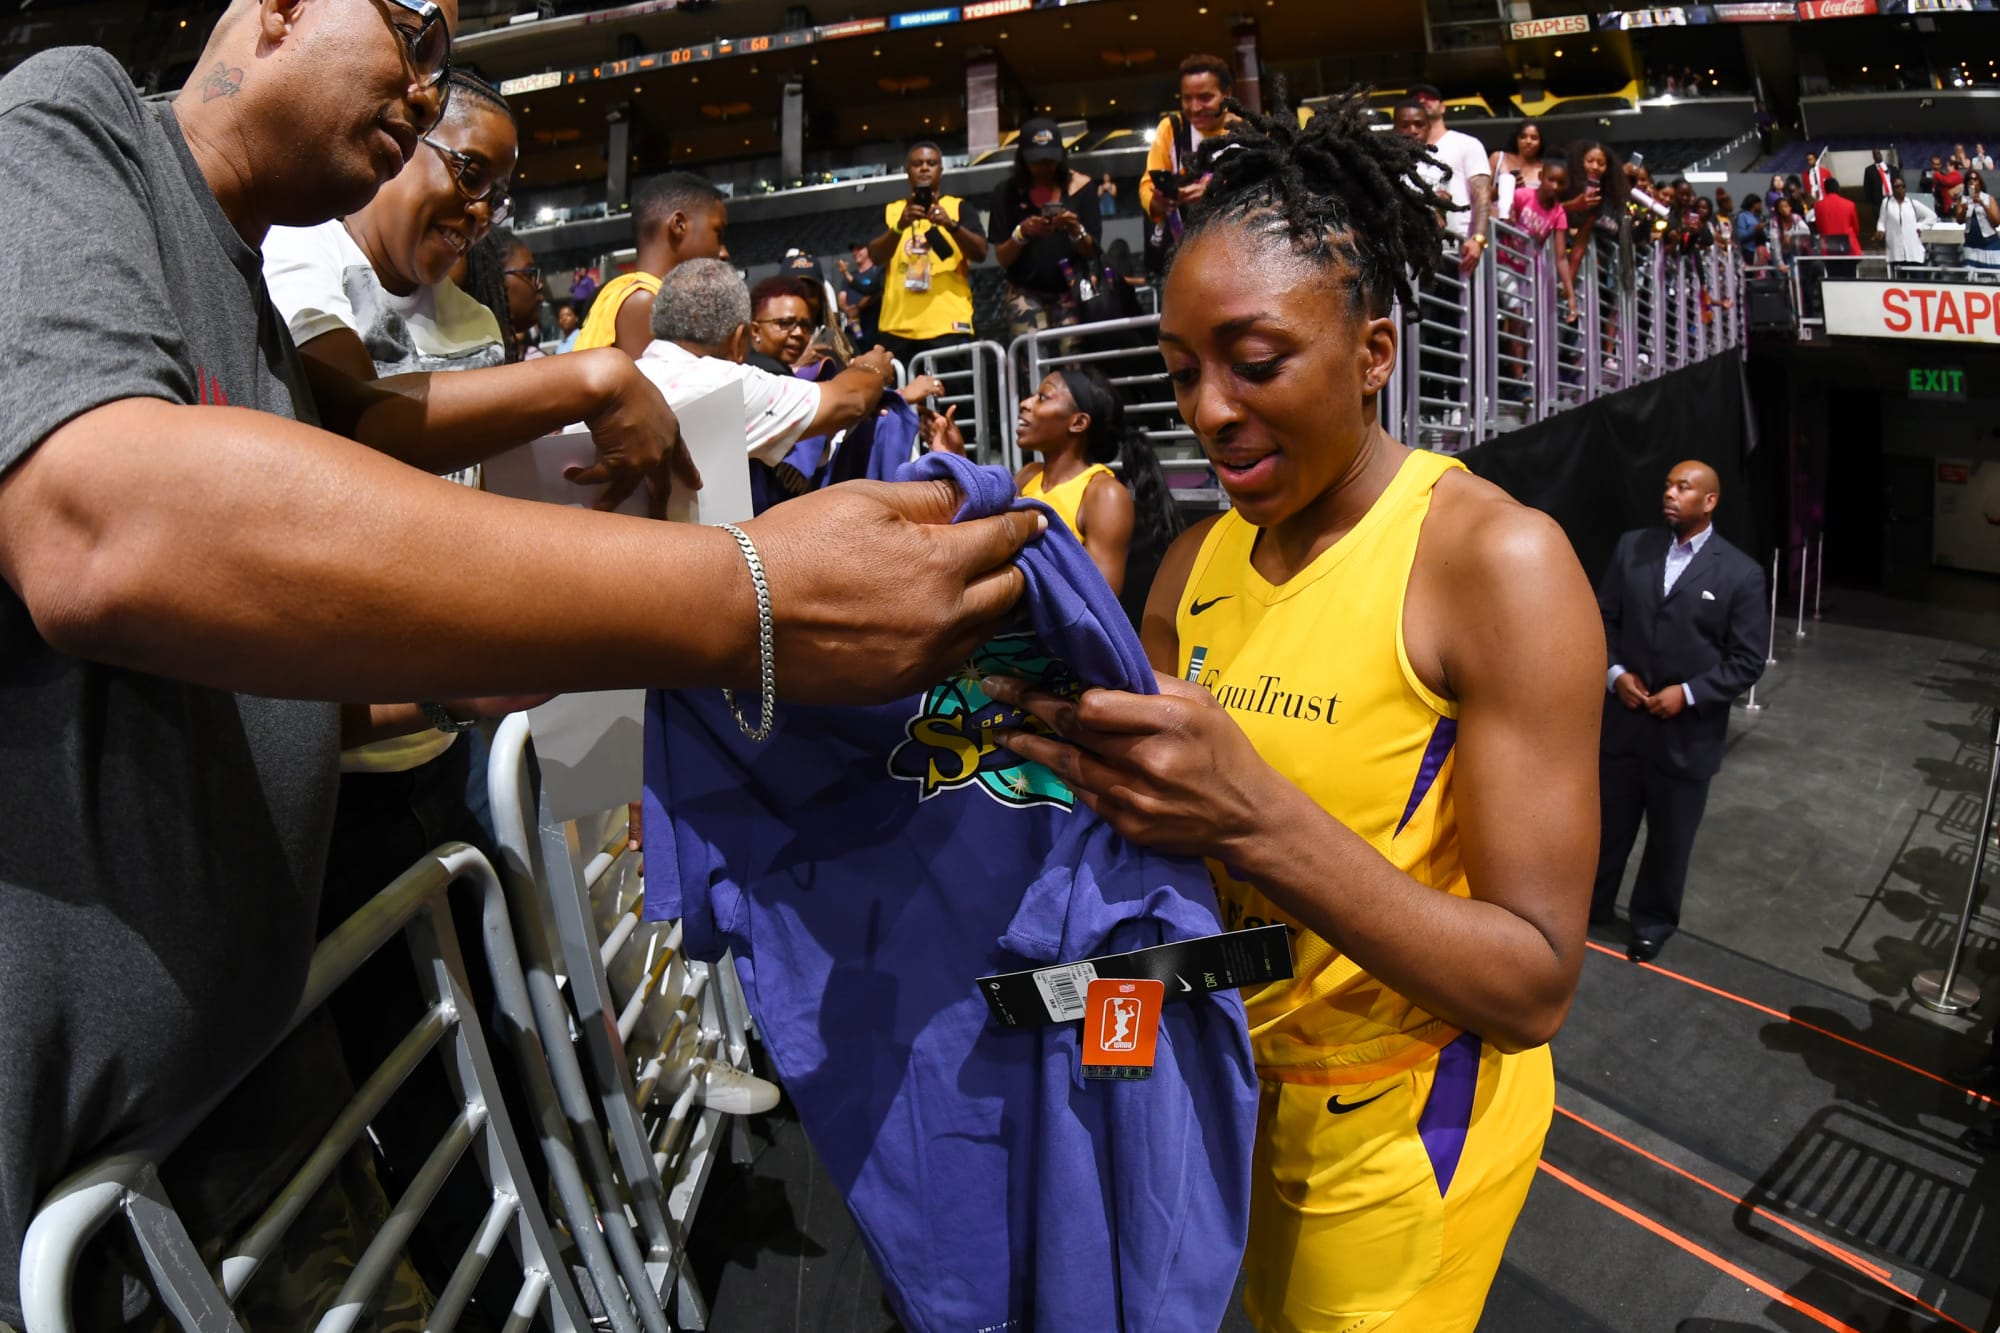 Nneka Ogwumike wins the WNBA's 2019 sportsmanship award